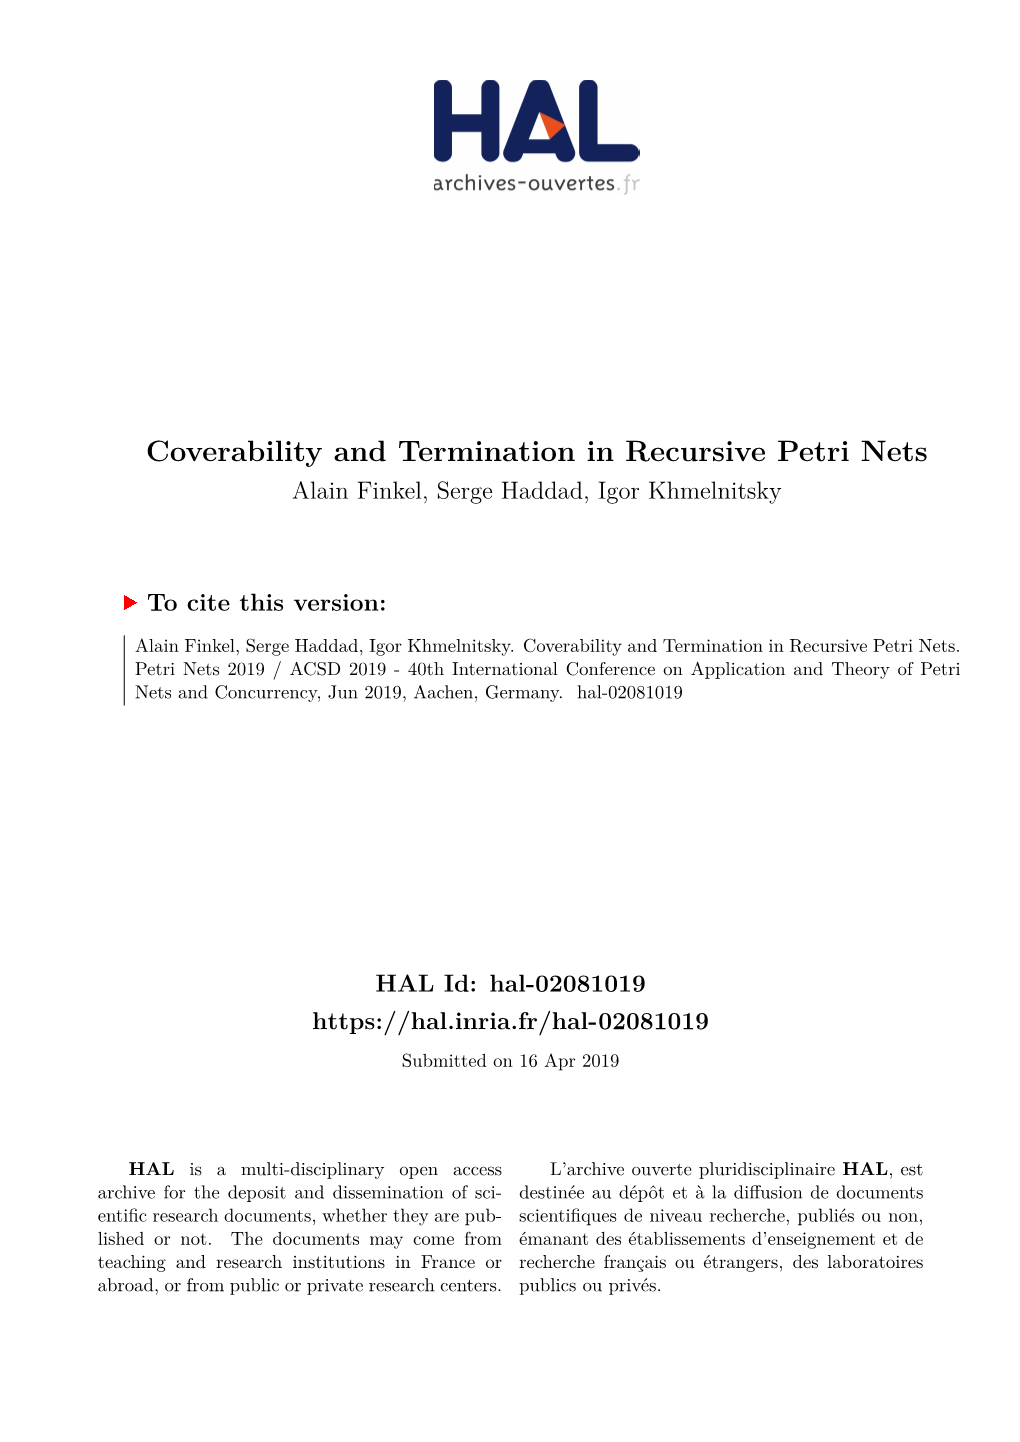 Coverability and Termination in Recursive Petri Nets Alain Finkel, Serge Haddad, Igor Khmelnitsky